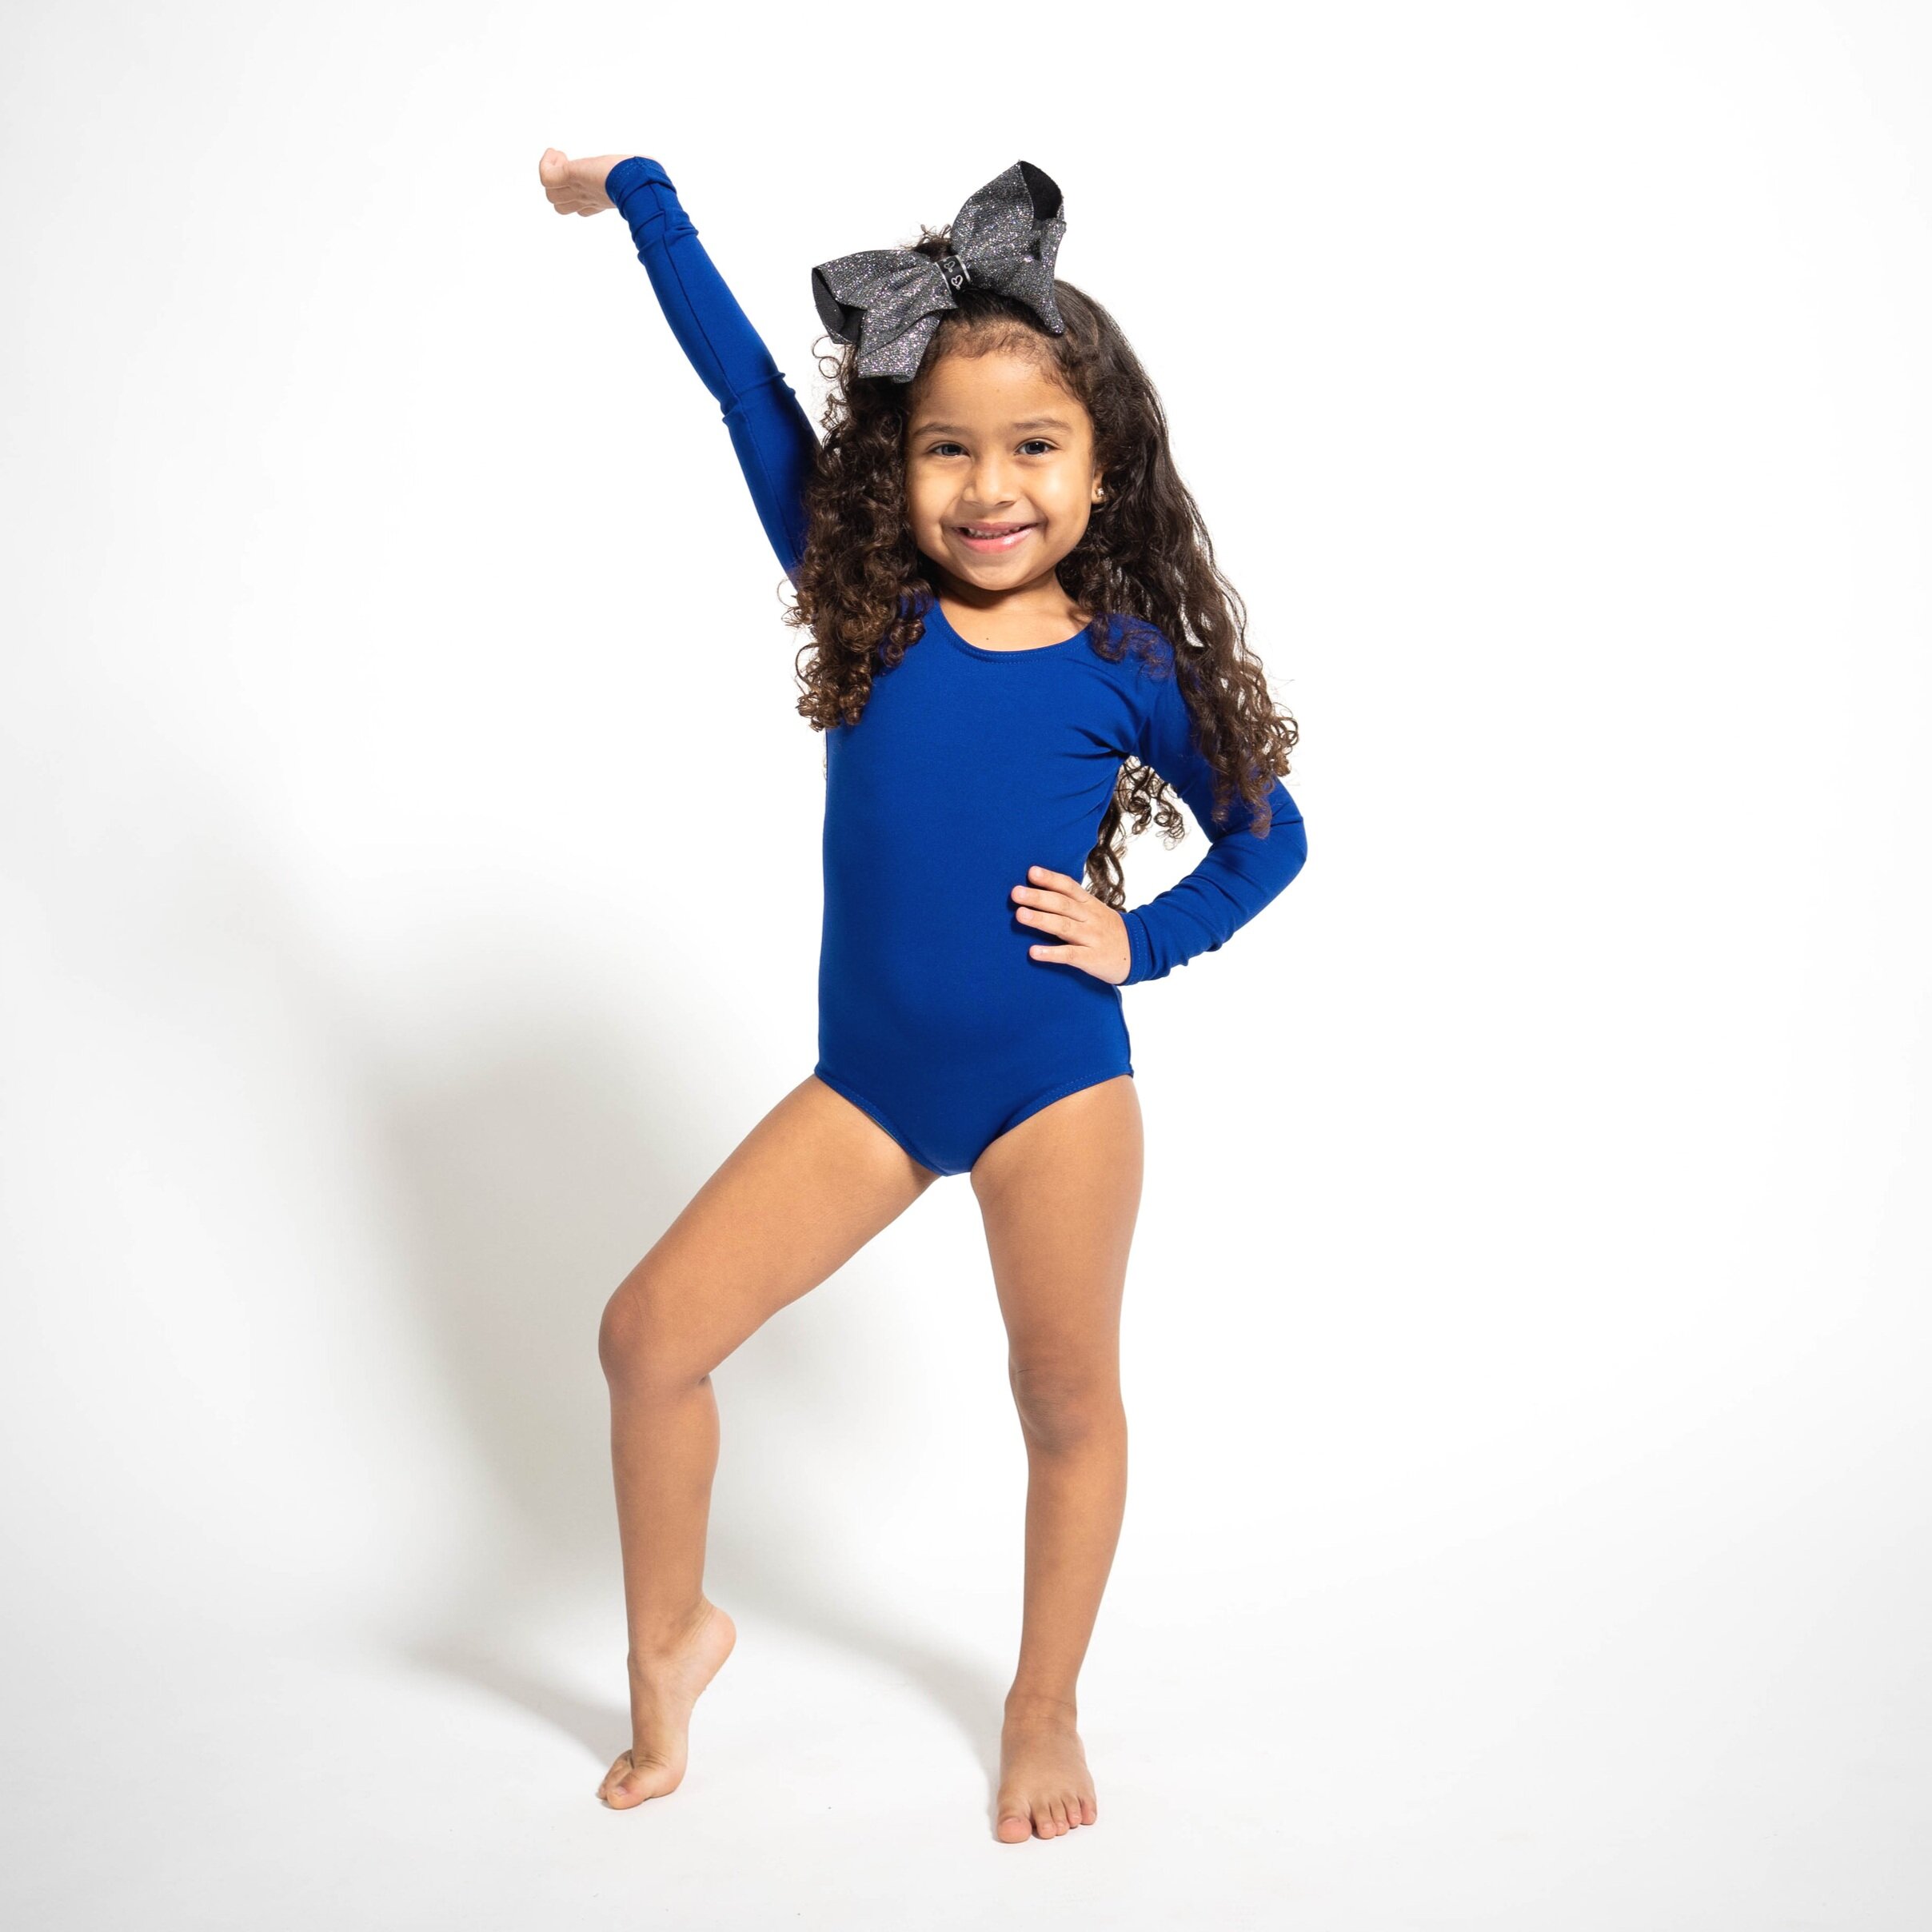 Photo of little girl wearing blue leotard posing. (Copy) (Copy) (Copy) (Copy) (Copy) (Copy)